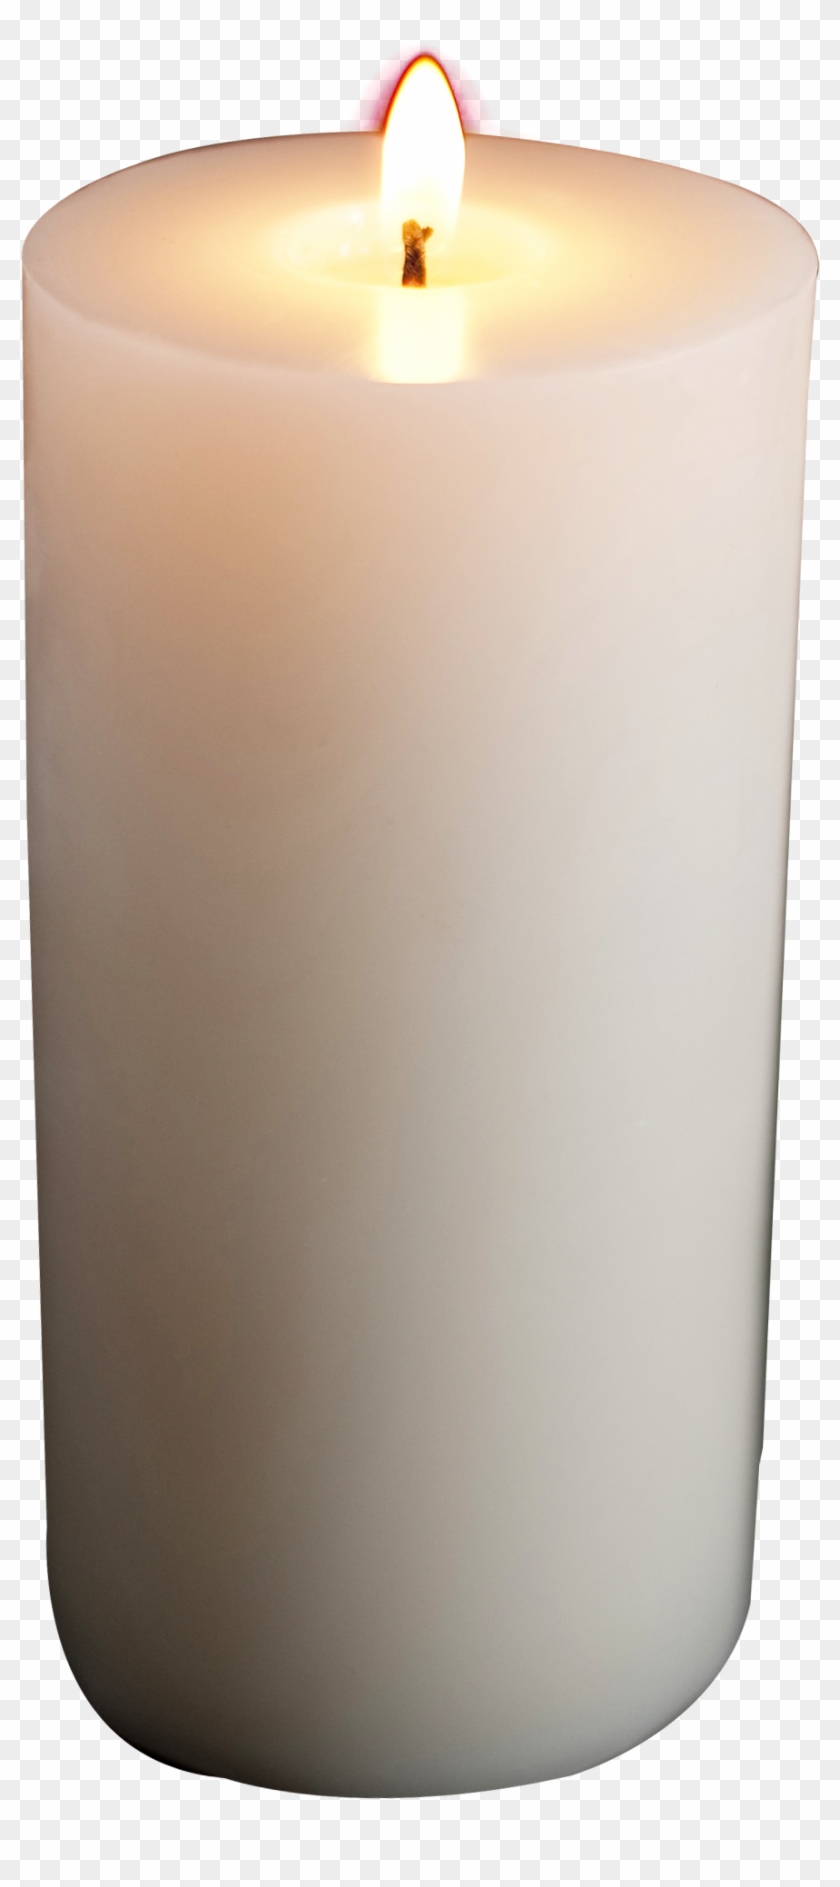 Candle Png Transparent Image - Candle Transparent Clipart #347282